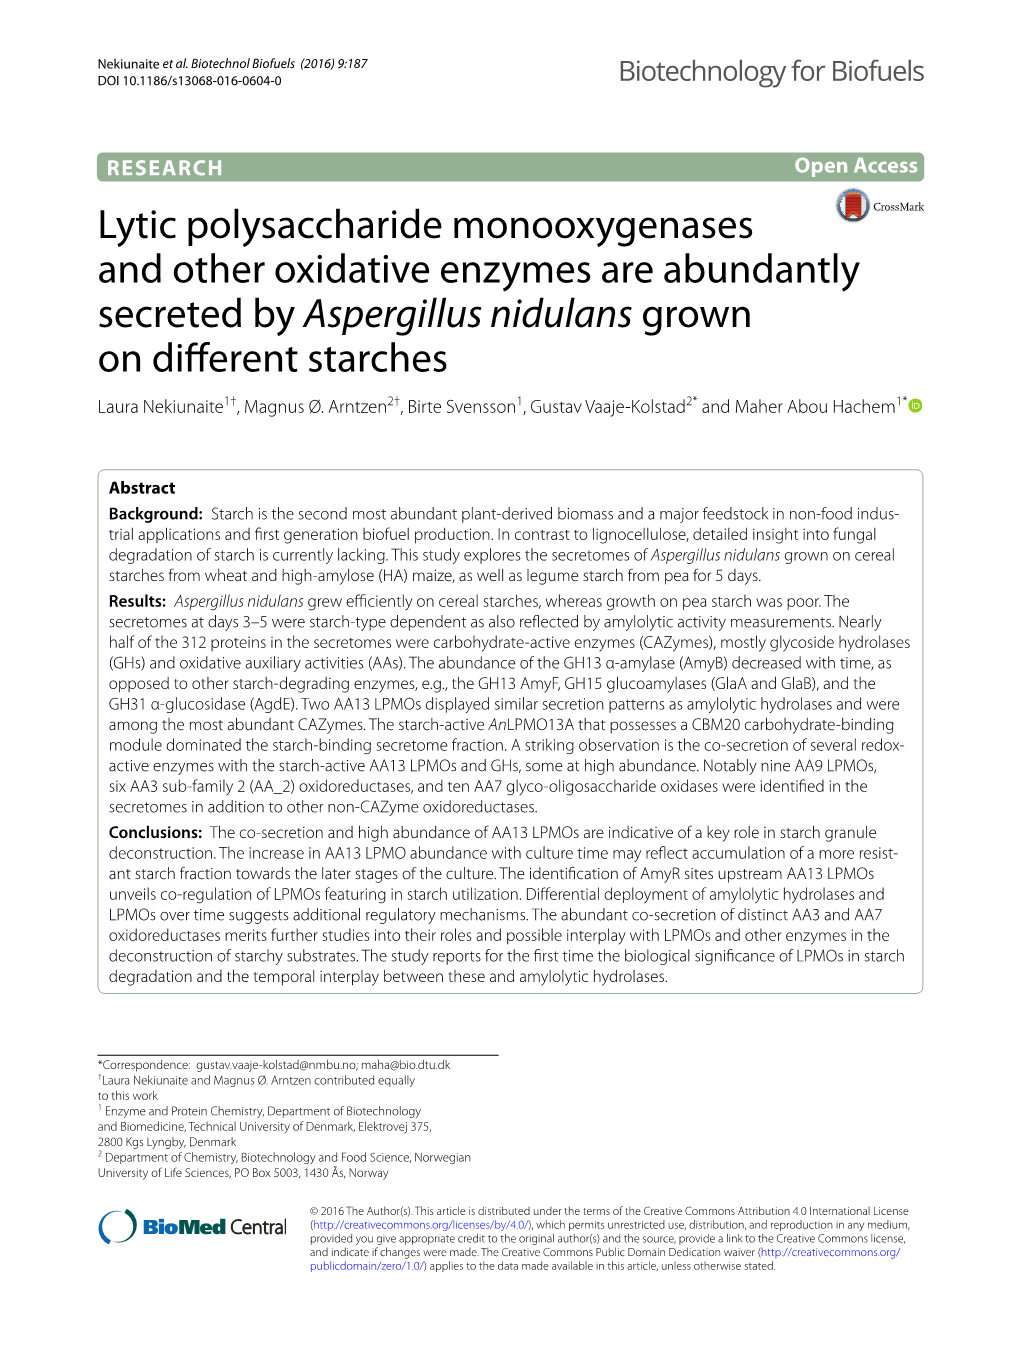 Lytic Polysaccharide Monooxygenases and Other Oxidative Enzymes